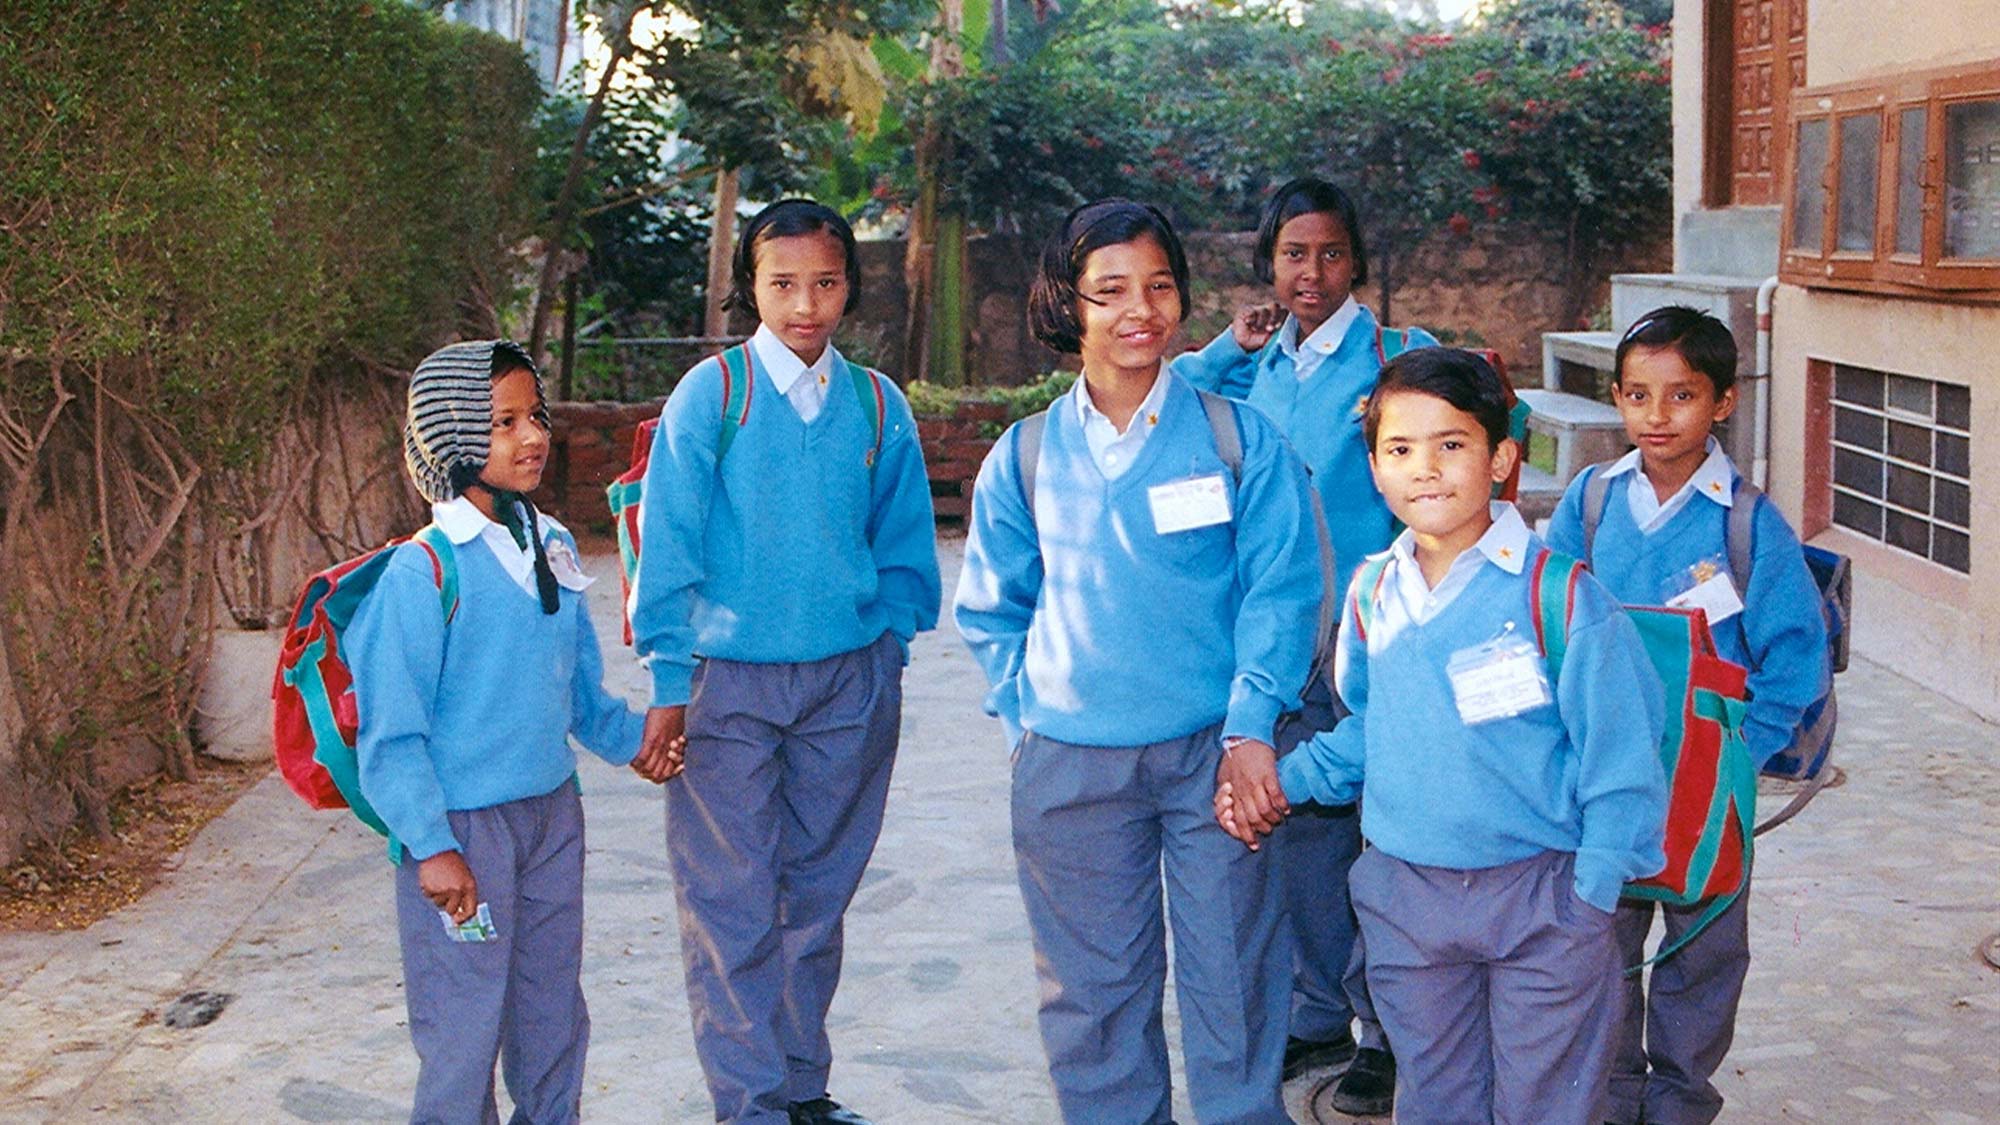 https://www.canserve.ca/wp-content/uploads/2015/10/02-Sanskar-school-uniforms.jpg